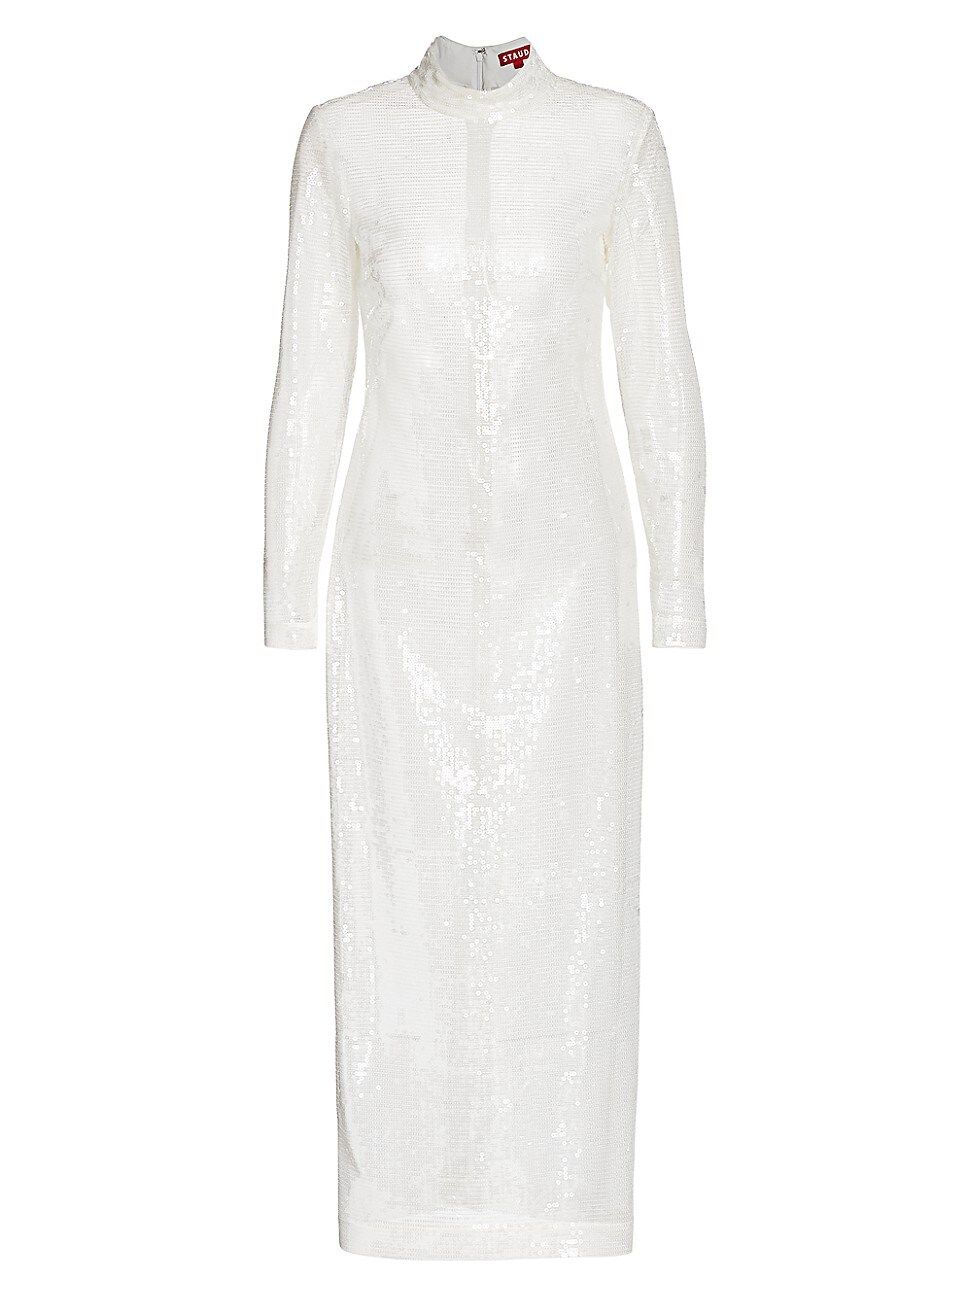 Staud Women's Liza Sequin Mock-Neck Dress - White - Size 12 | Saks Fifth Avenue